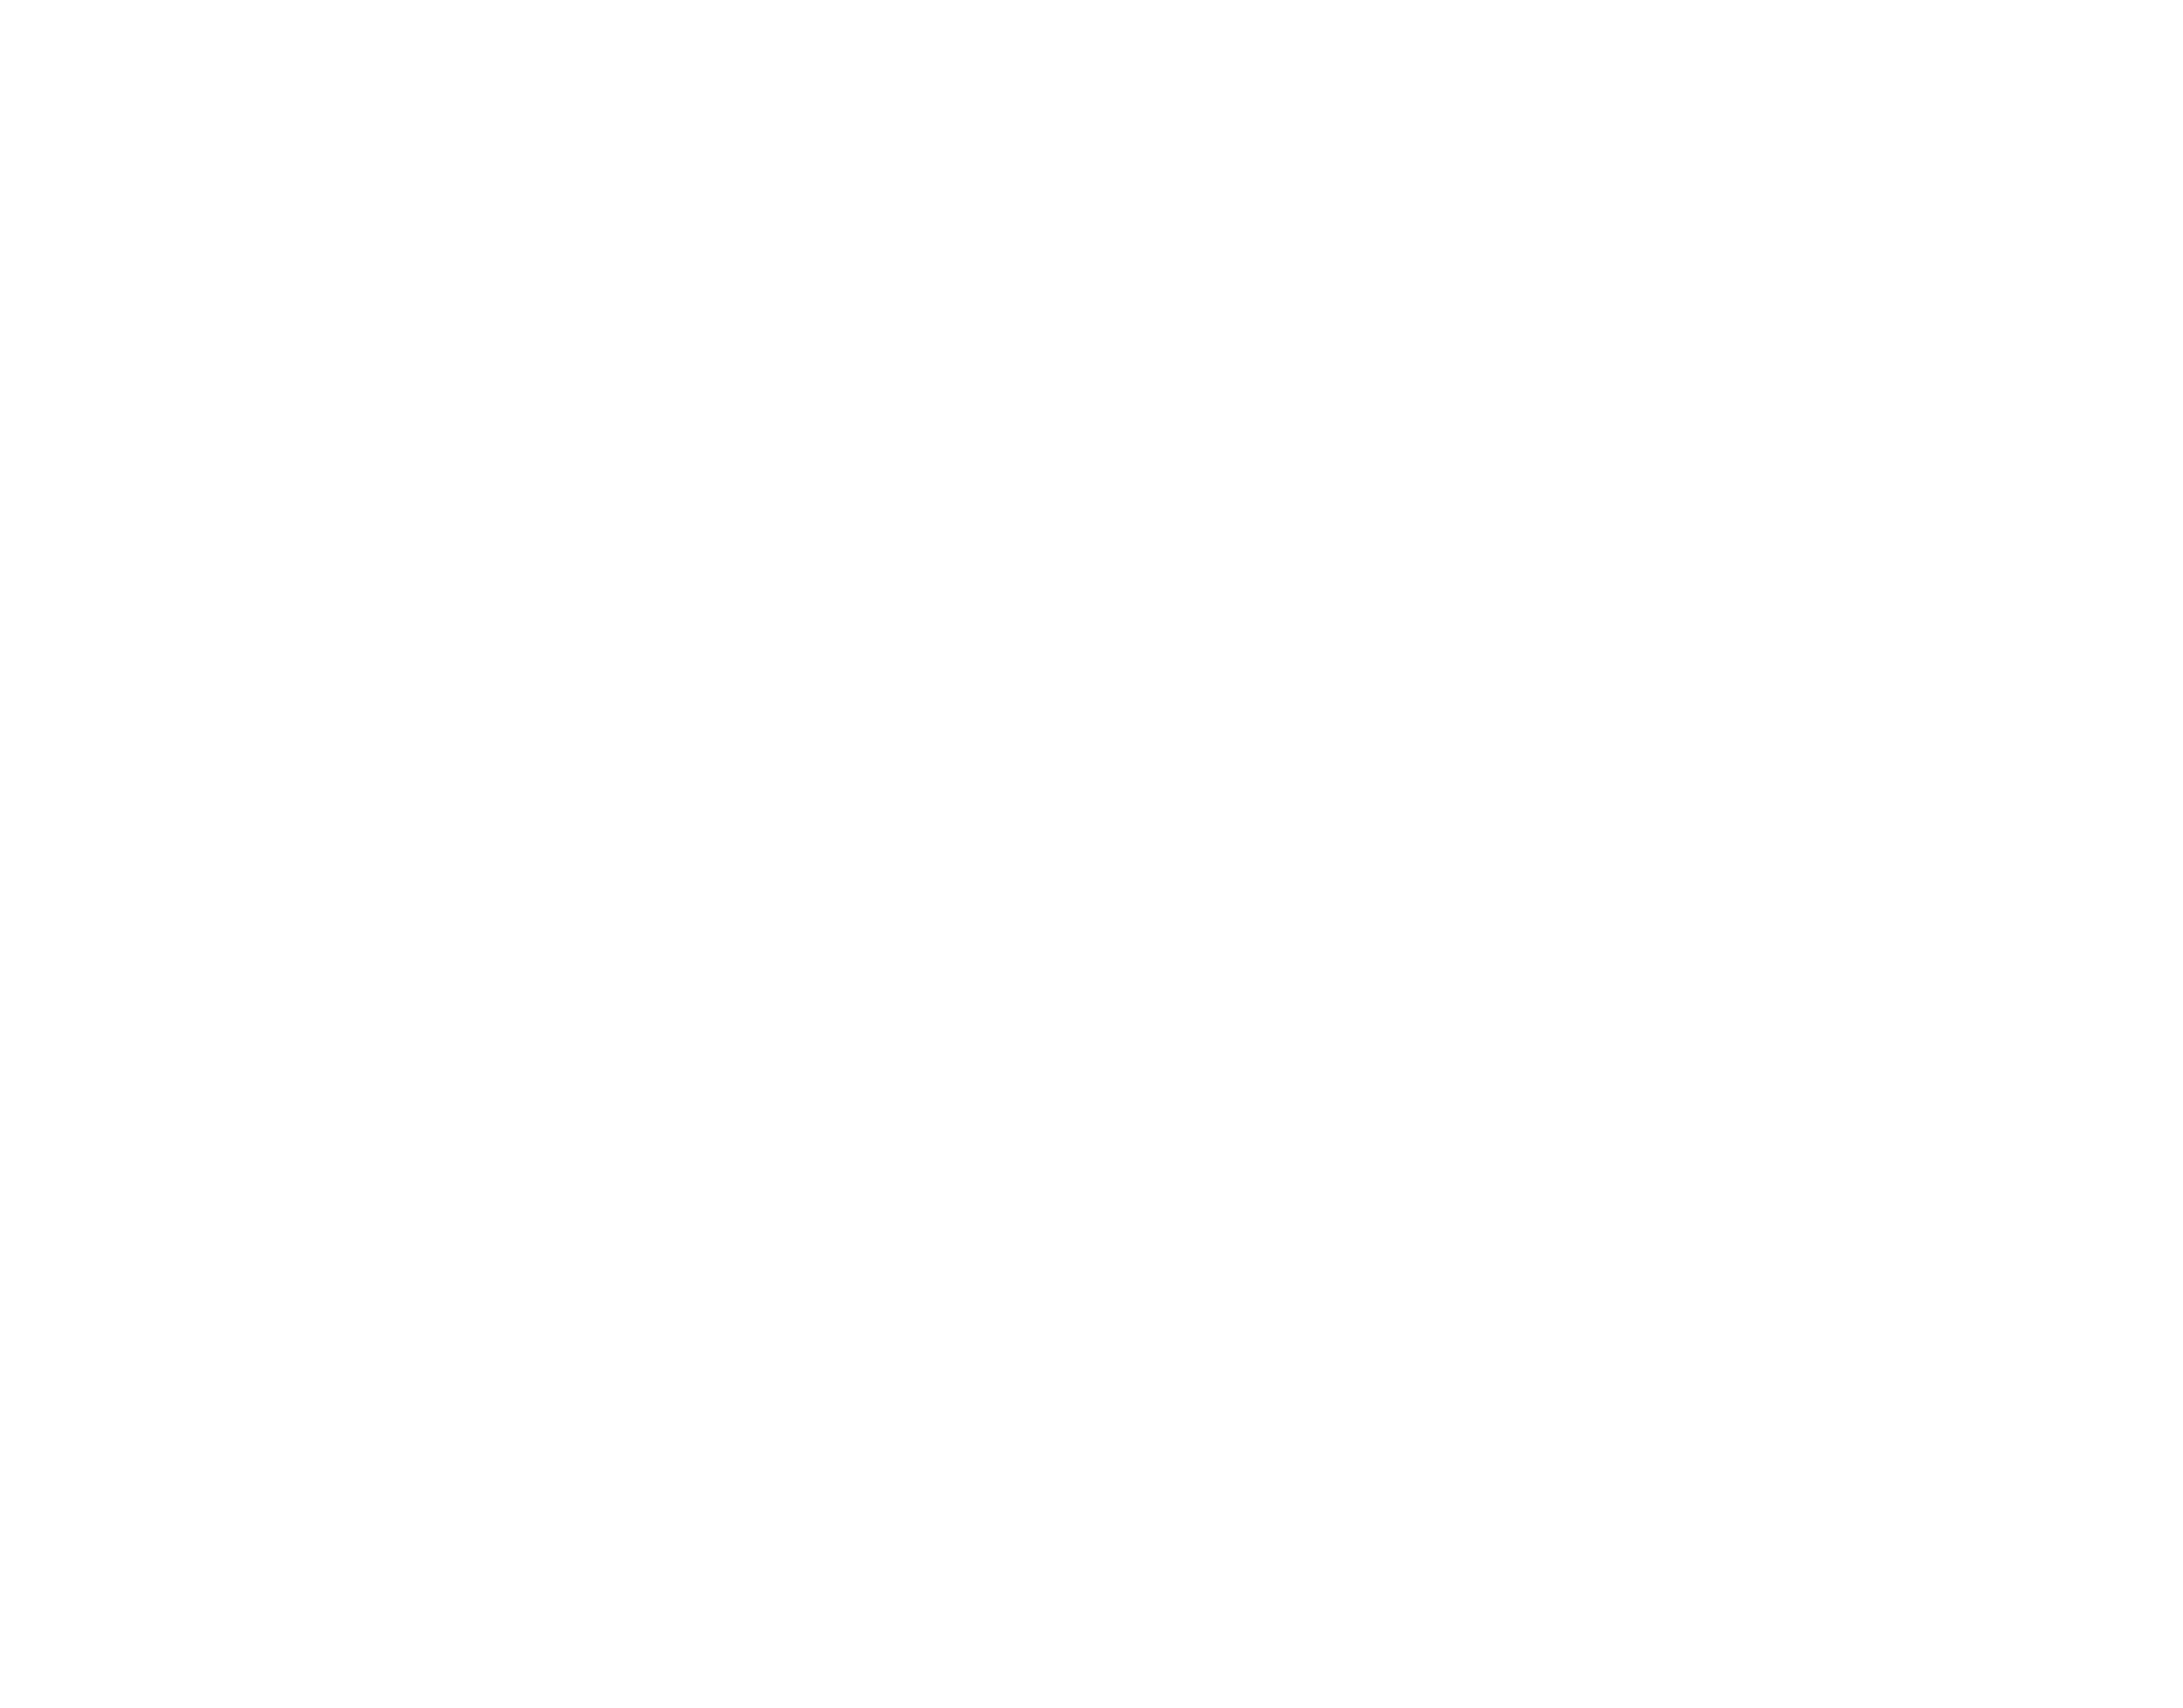 The Novo Nordisk New Jersey Marathon